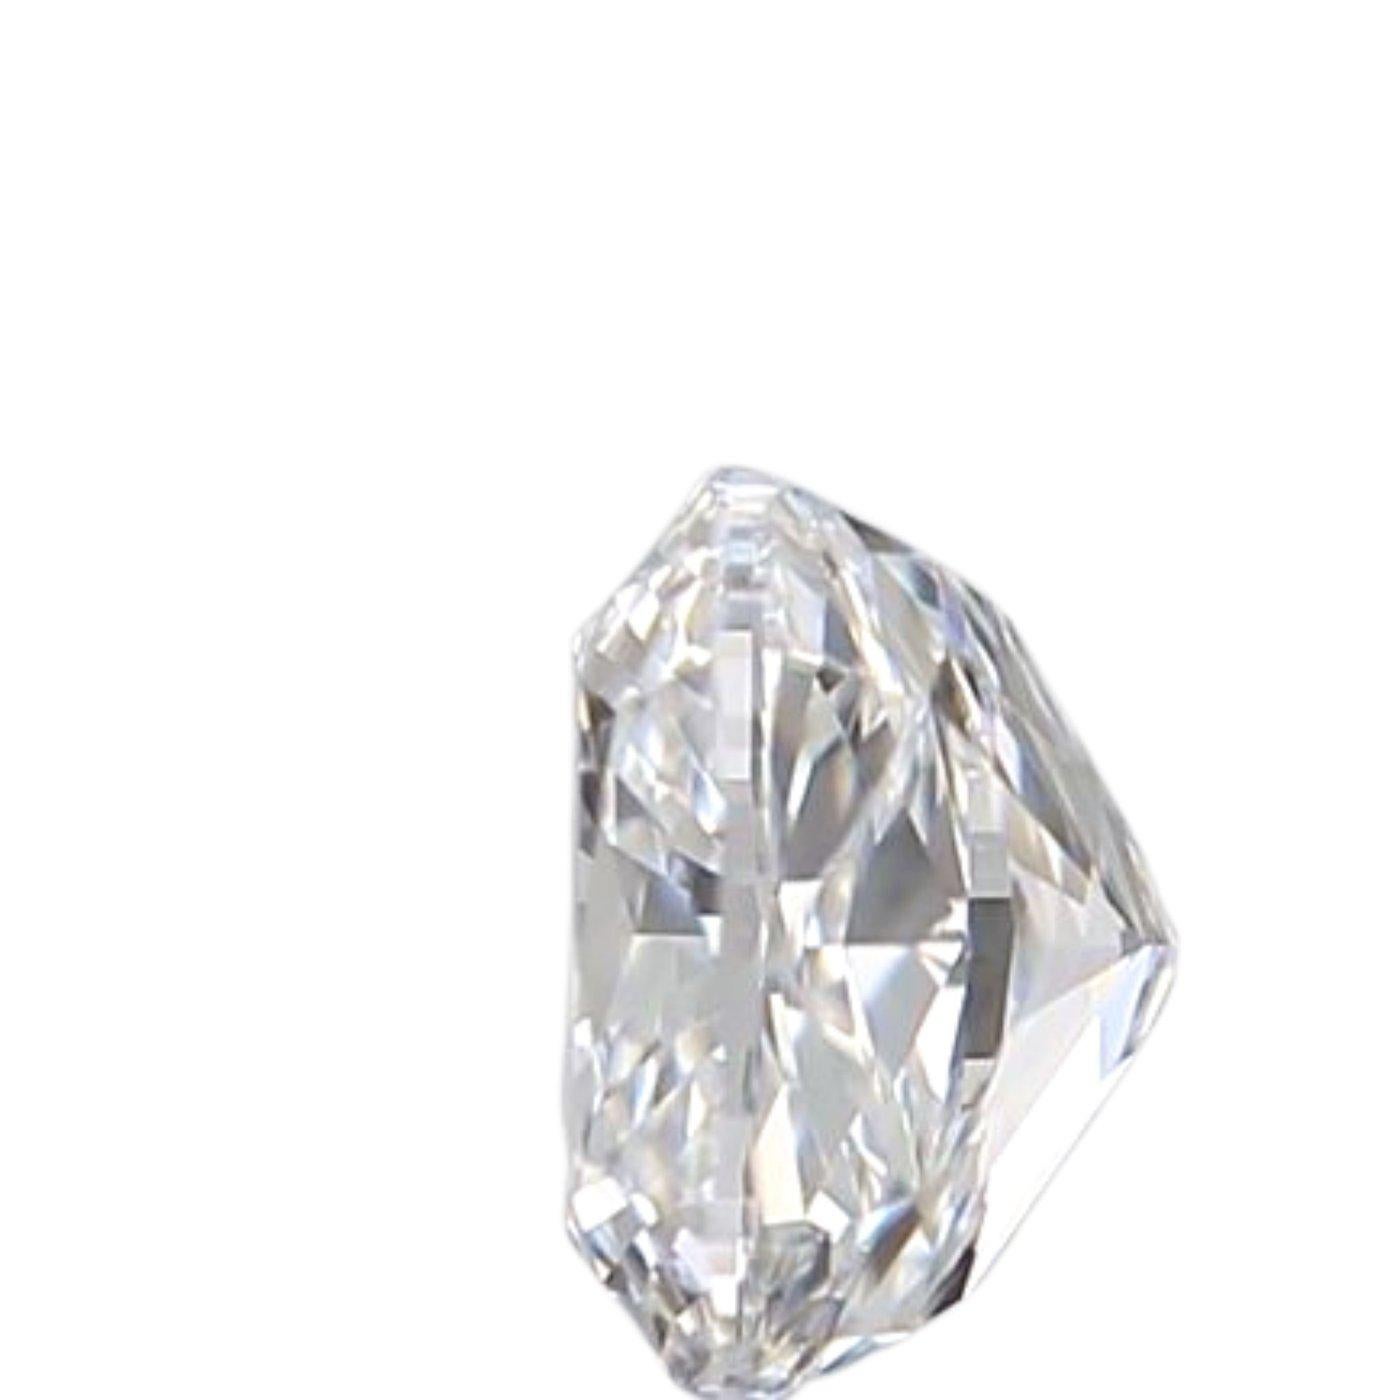 Cushion Cut Natural and Ideal Cut Cushion Diamond in a 0.42 carat E VS1, GIA Certificate For Sale